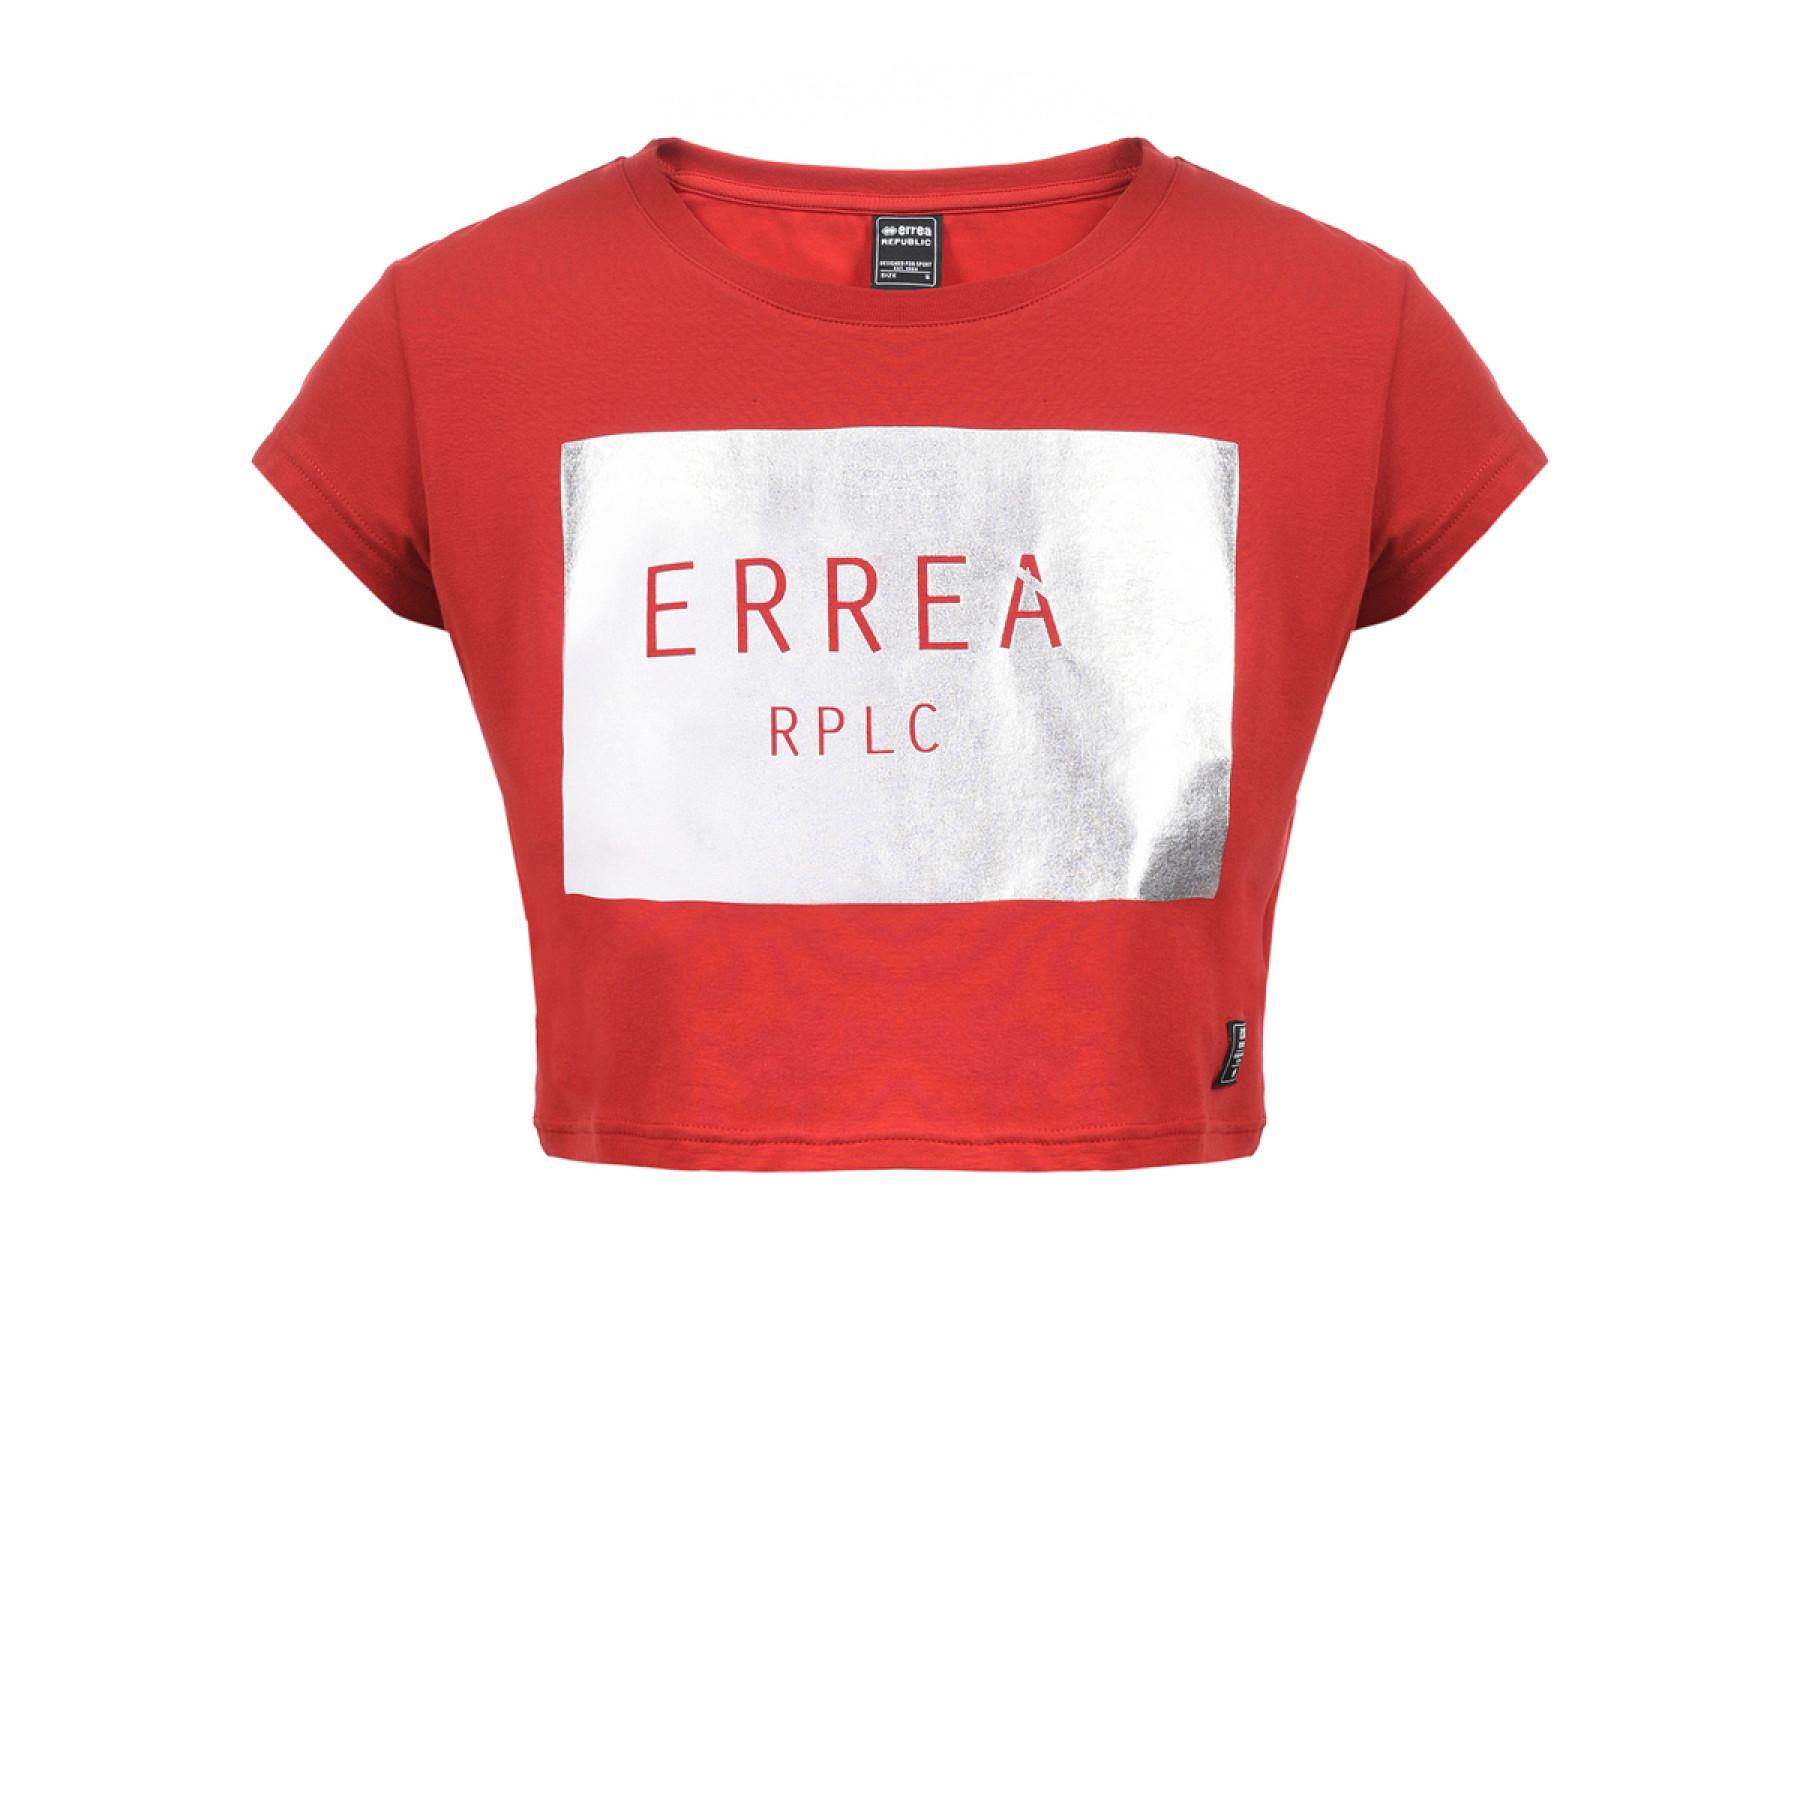 Camiseta crop top de mujer Errea trend square